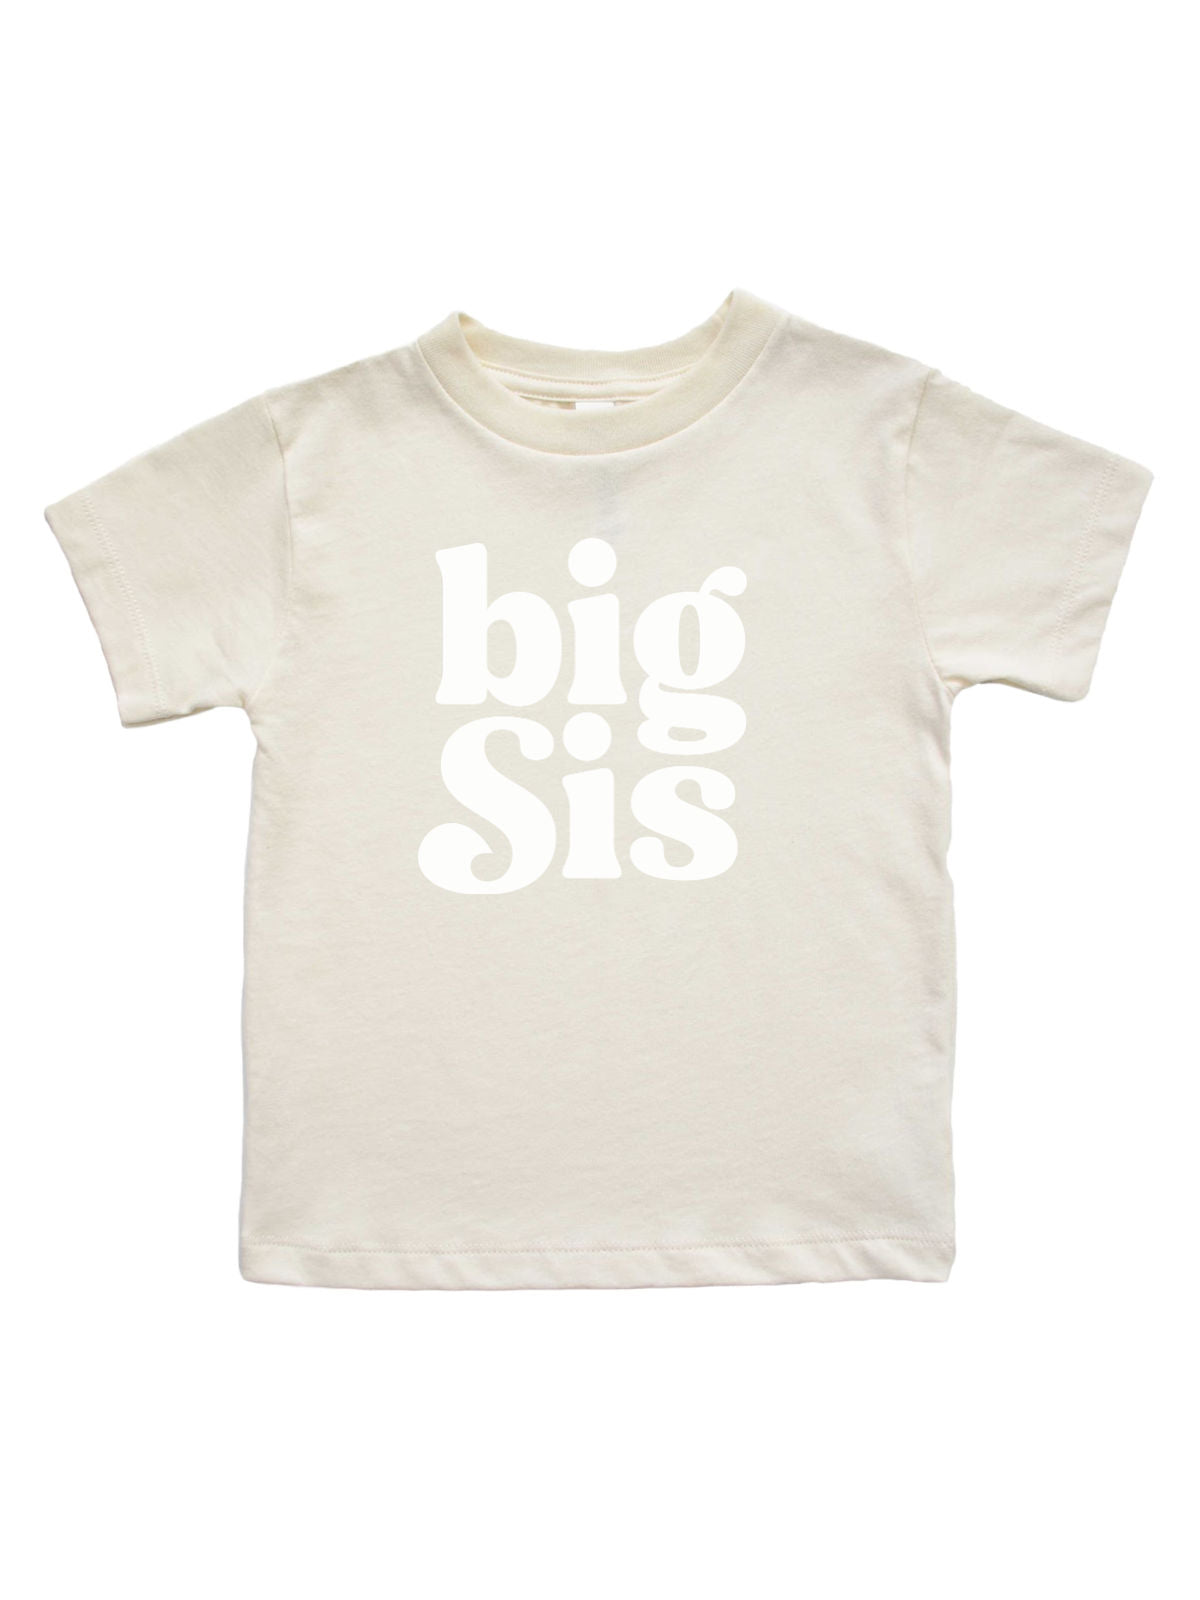 Big Sis Shirt for Girls in Natural